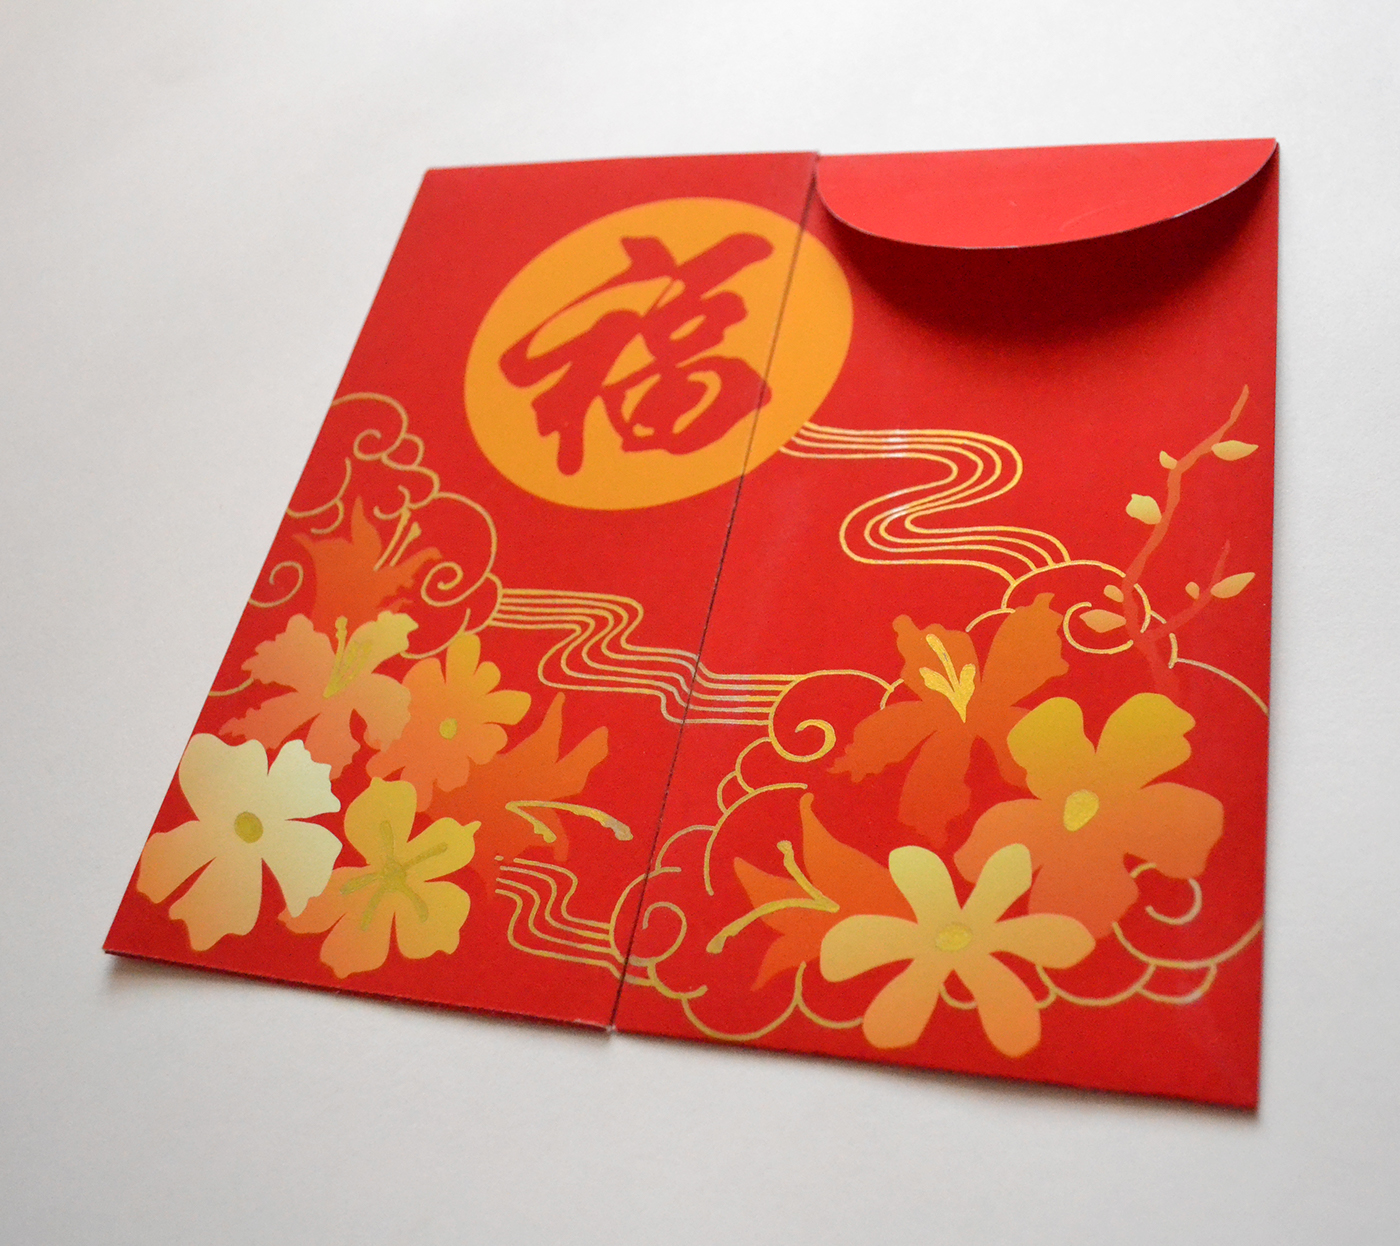 Source CUSTOM Red Envelope Elegant Design Chinese New Year Red